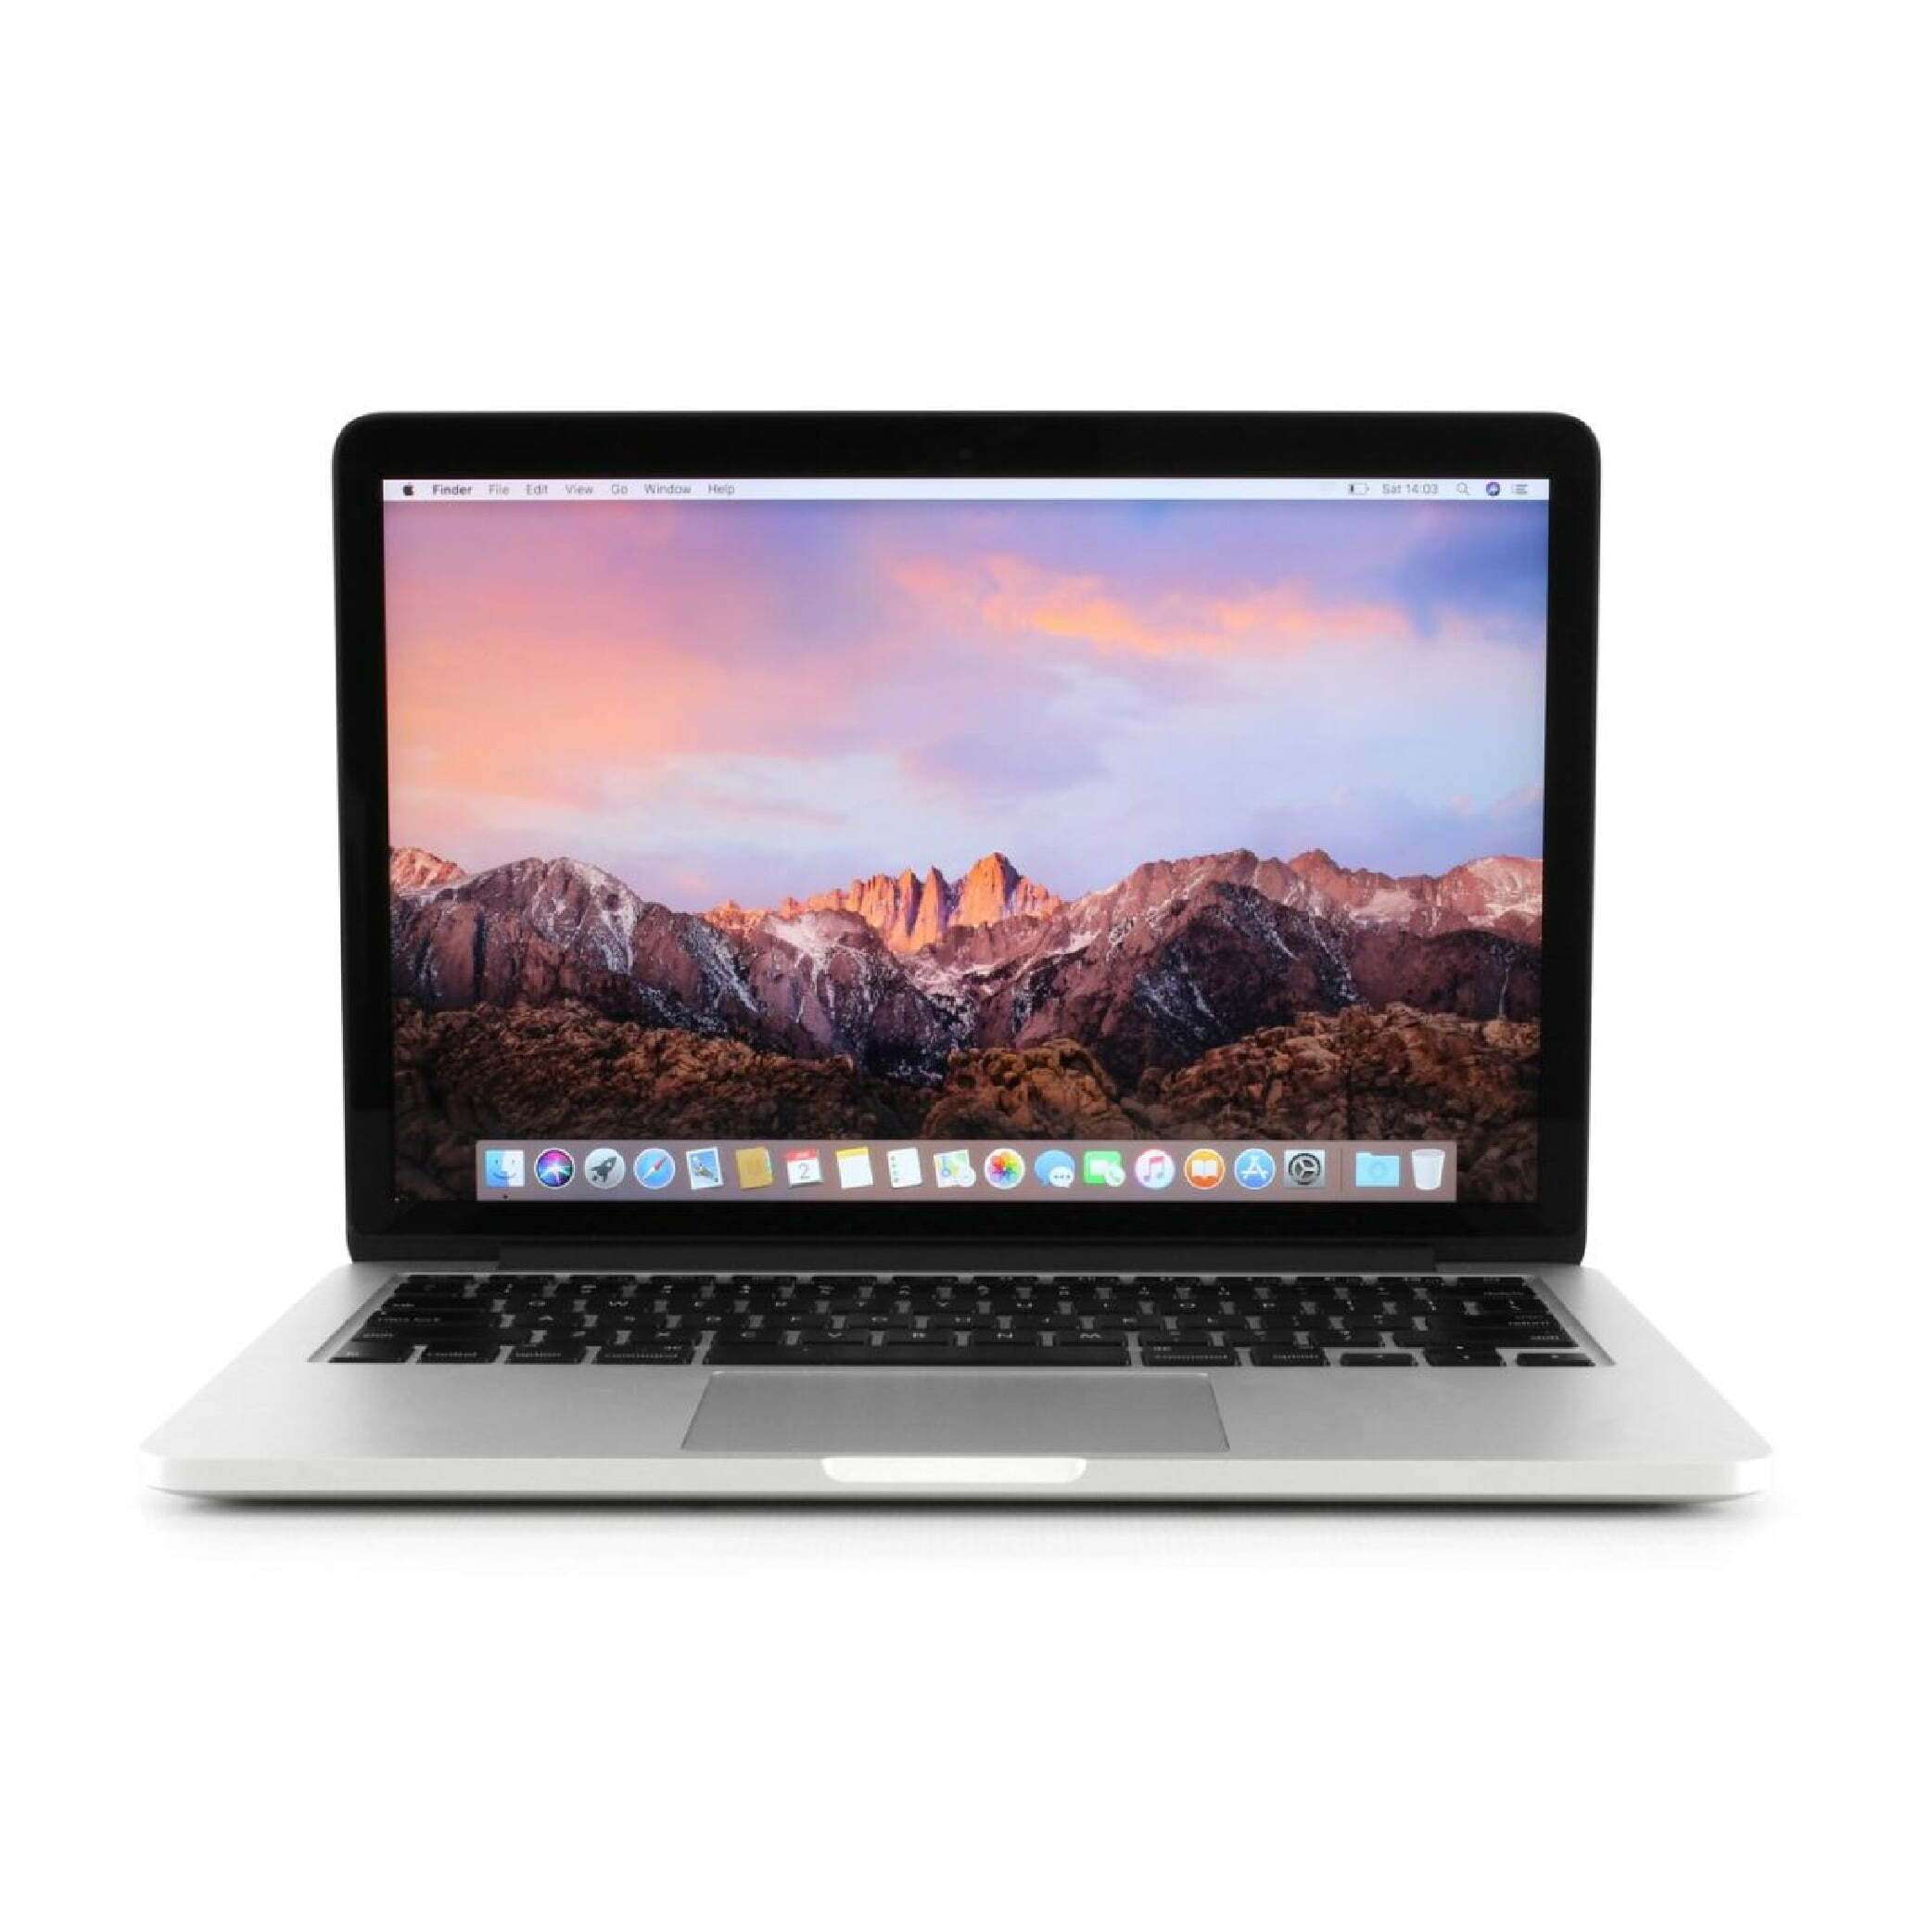 □Apple□ MacBook Pro (Retina, 15-inch, Mid 2015) / Core i7 2.5GHz 